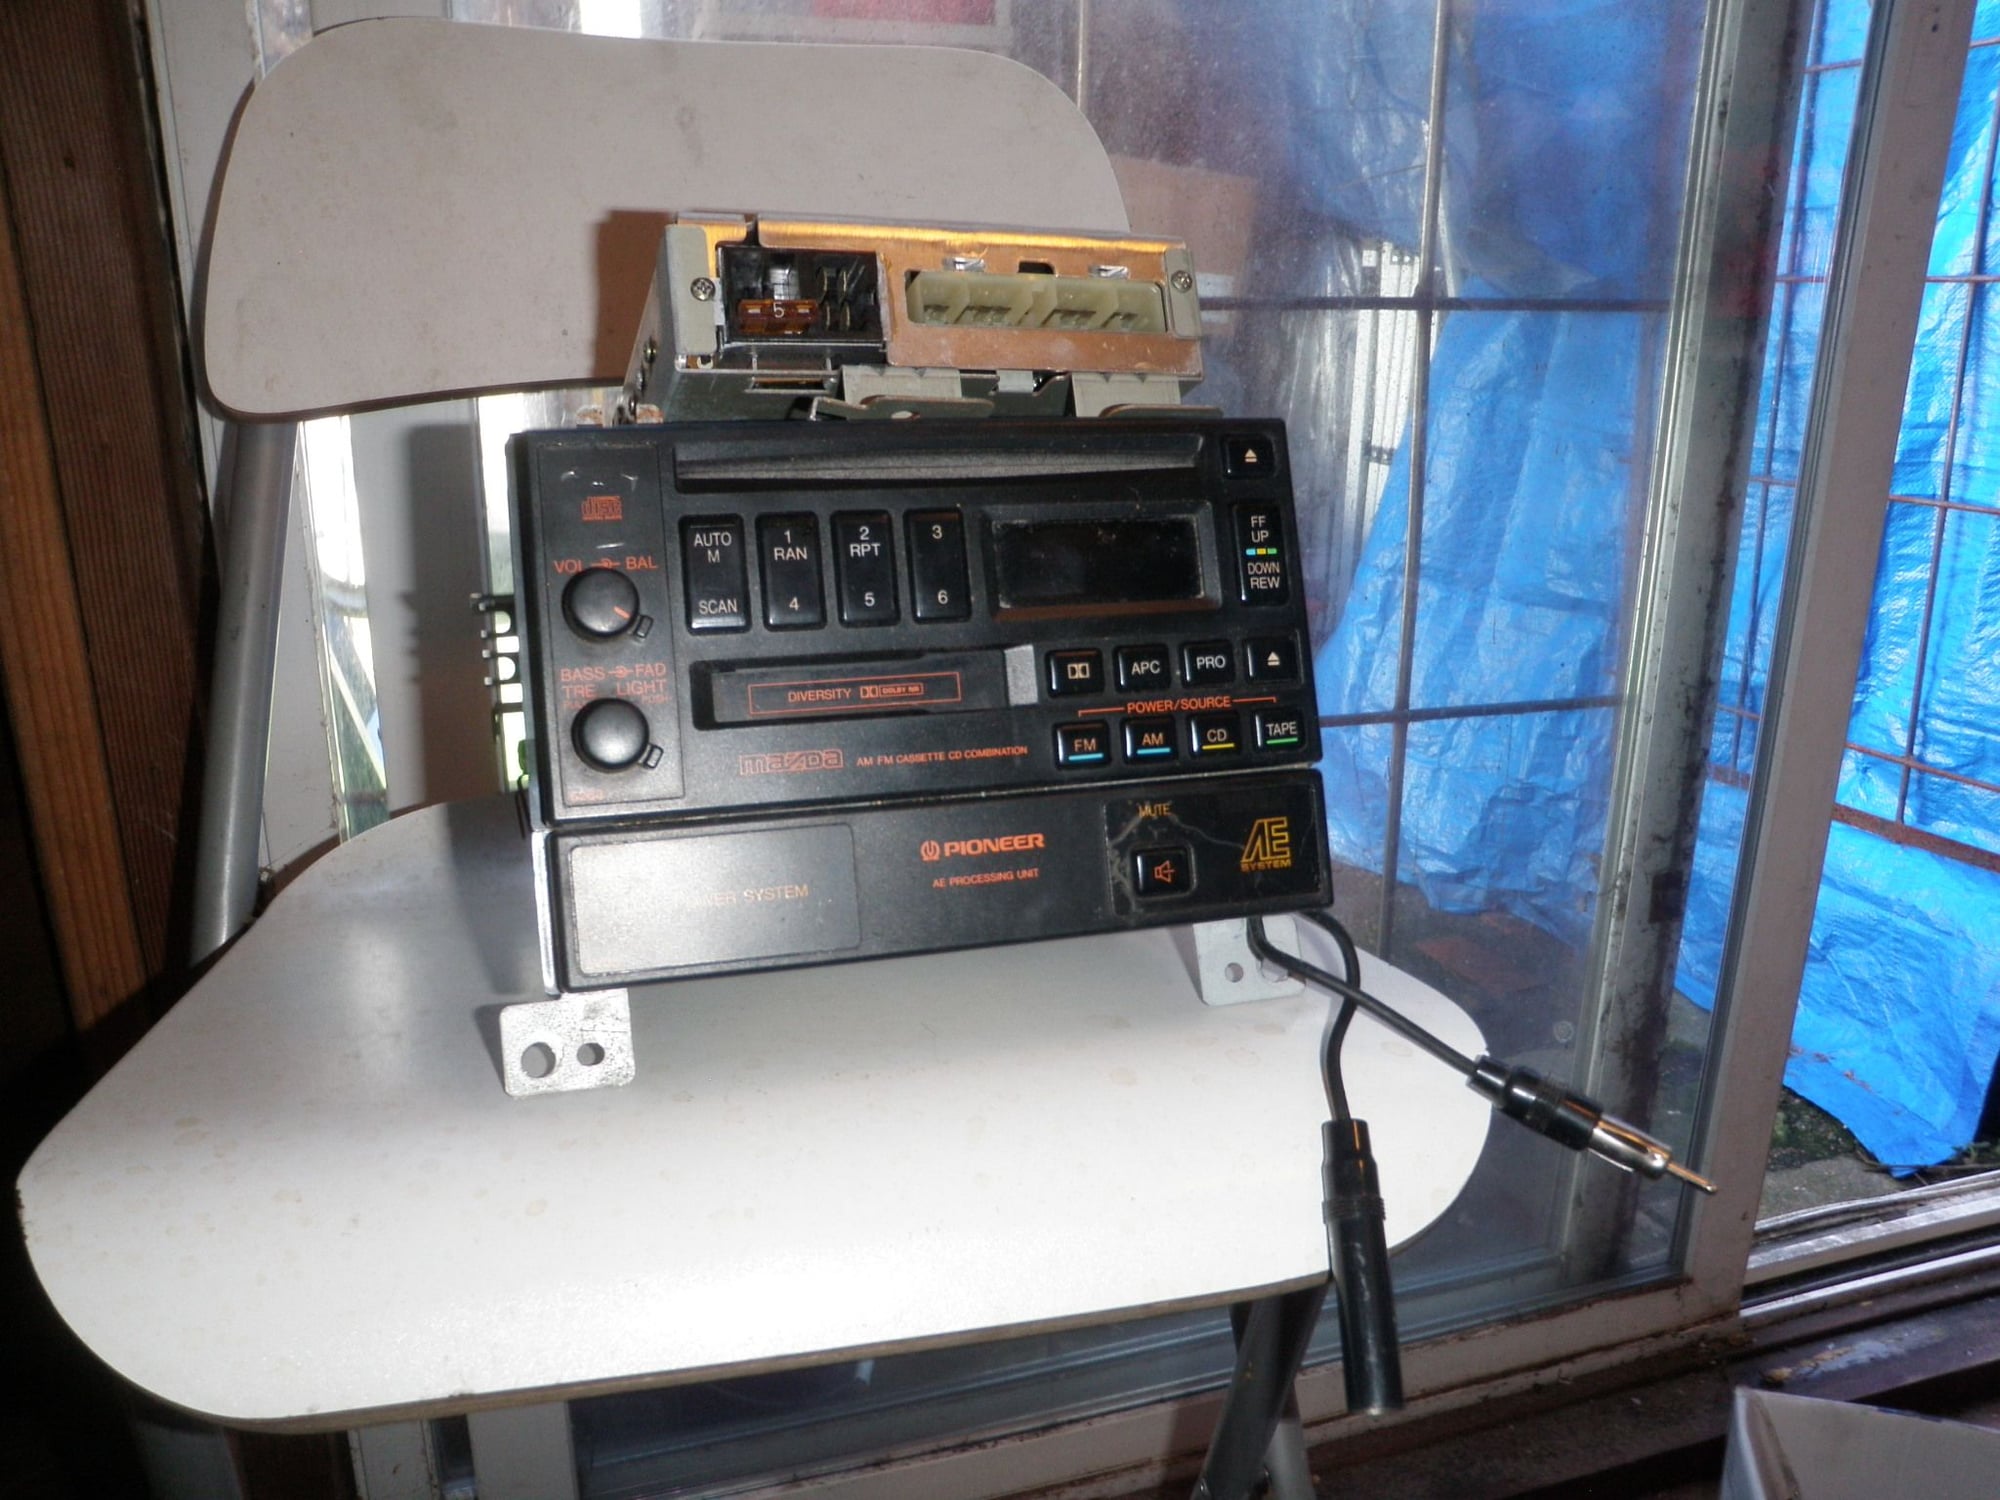 1990 Mazda RX-7 - FC stereo's - Audio Video/Electronics - $50 - Union City, CA 94587, United States